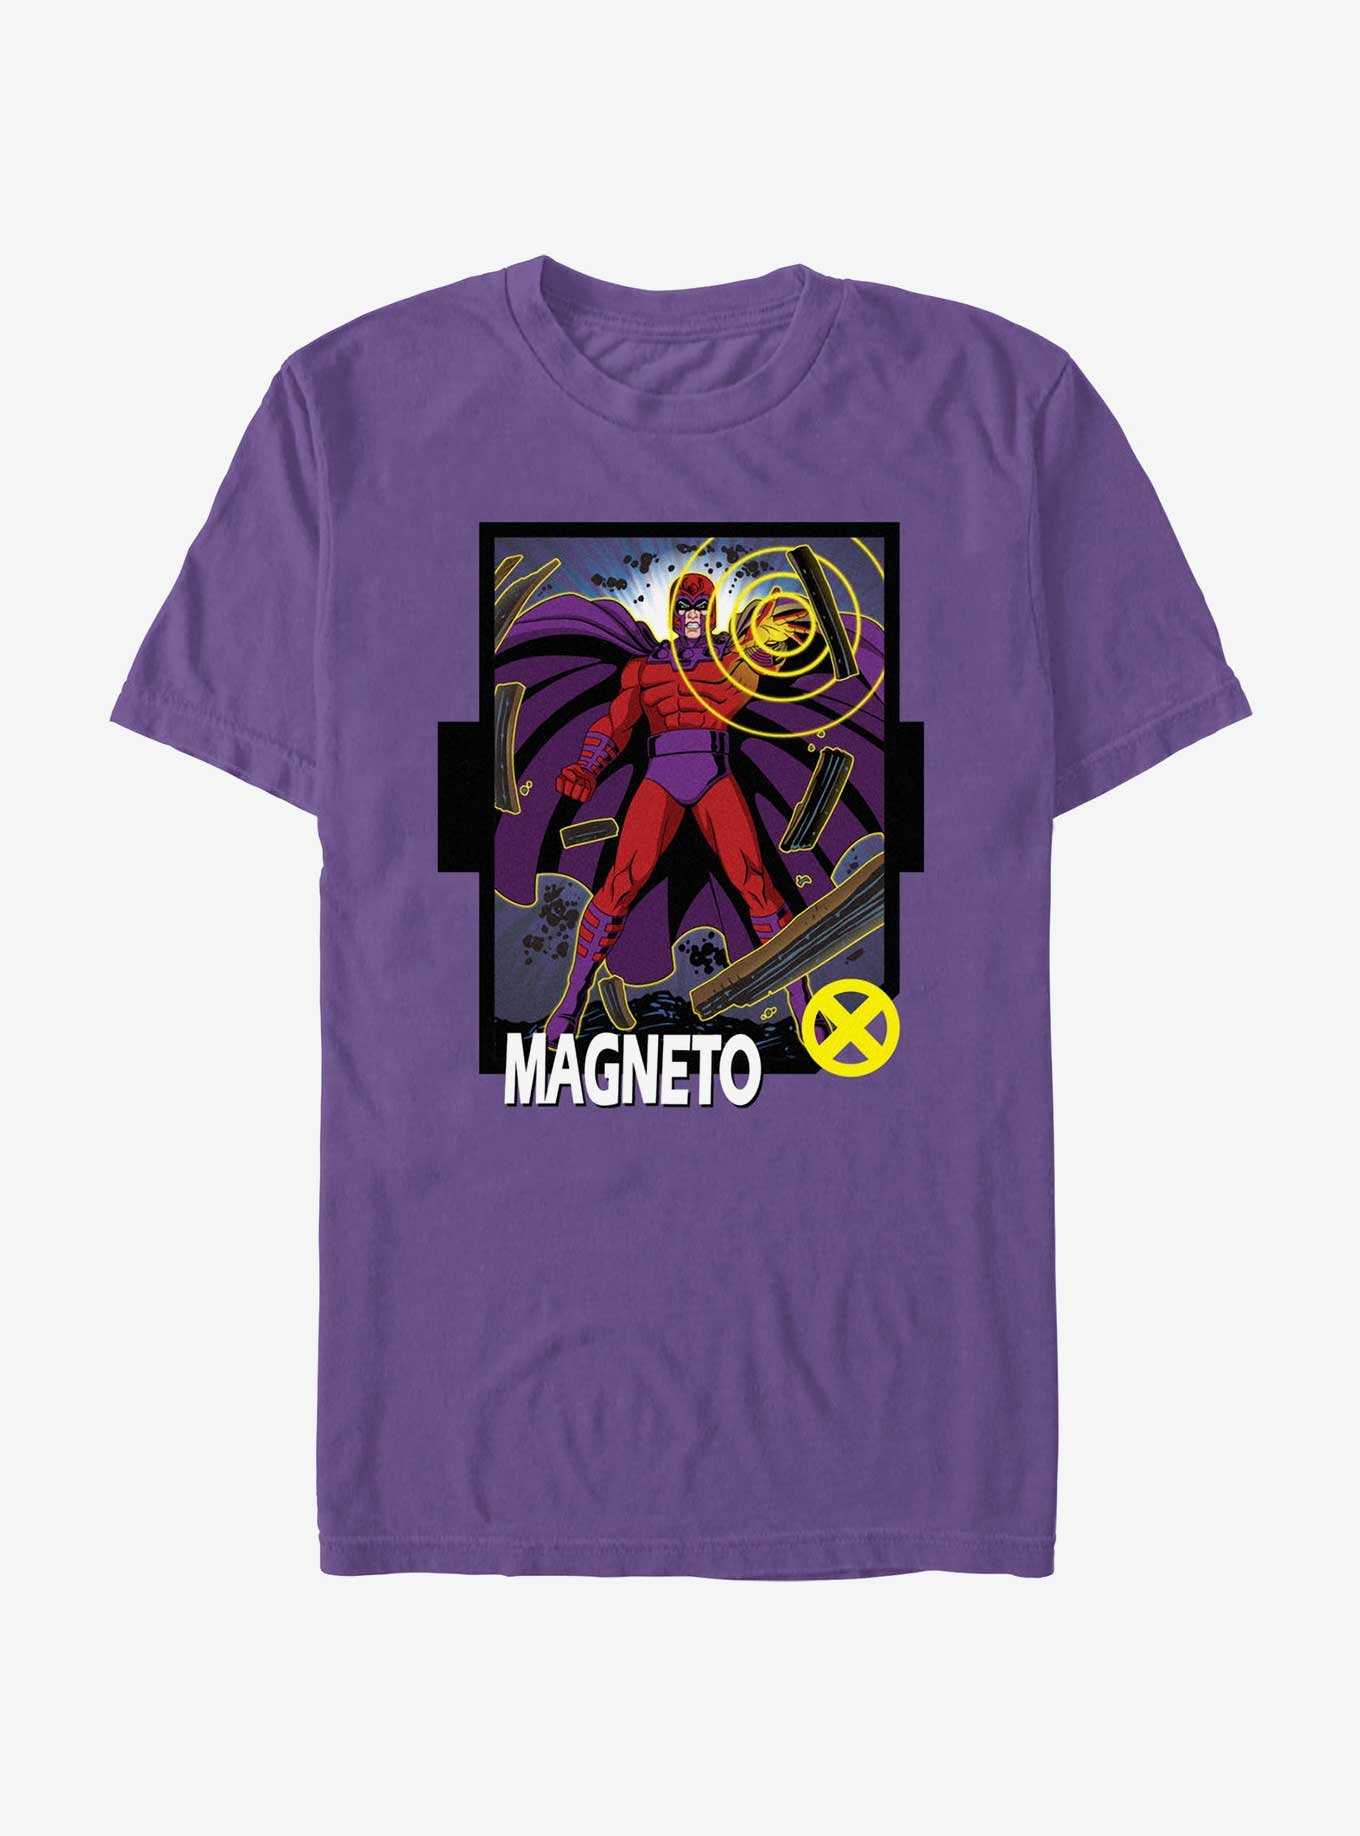 Marvel X-Men '97 Magneto Card T-Shirt, , hi-res